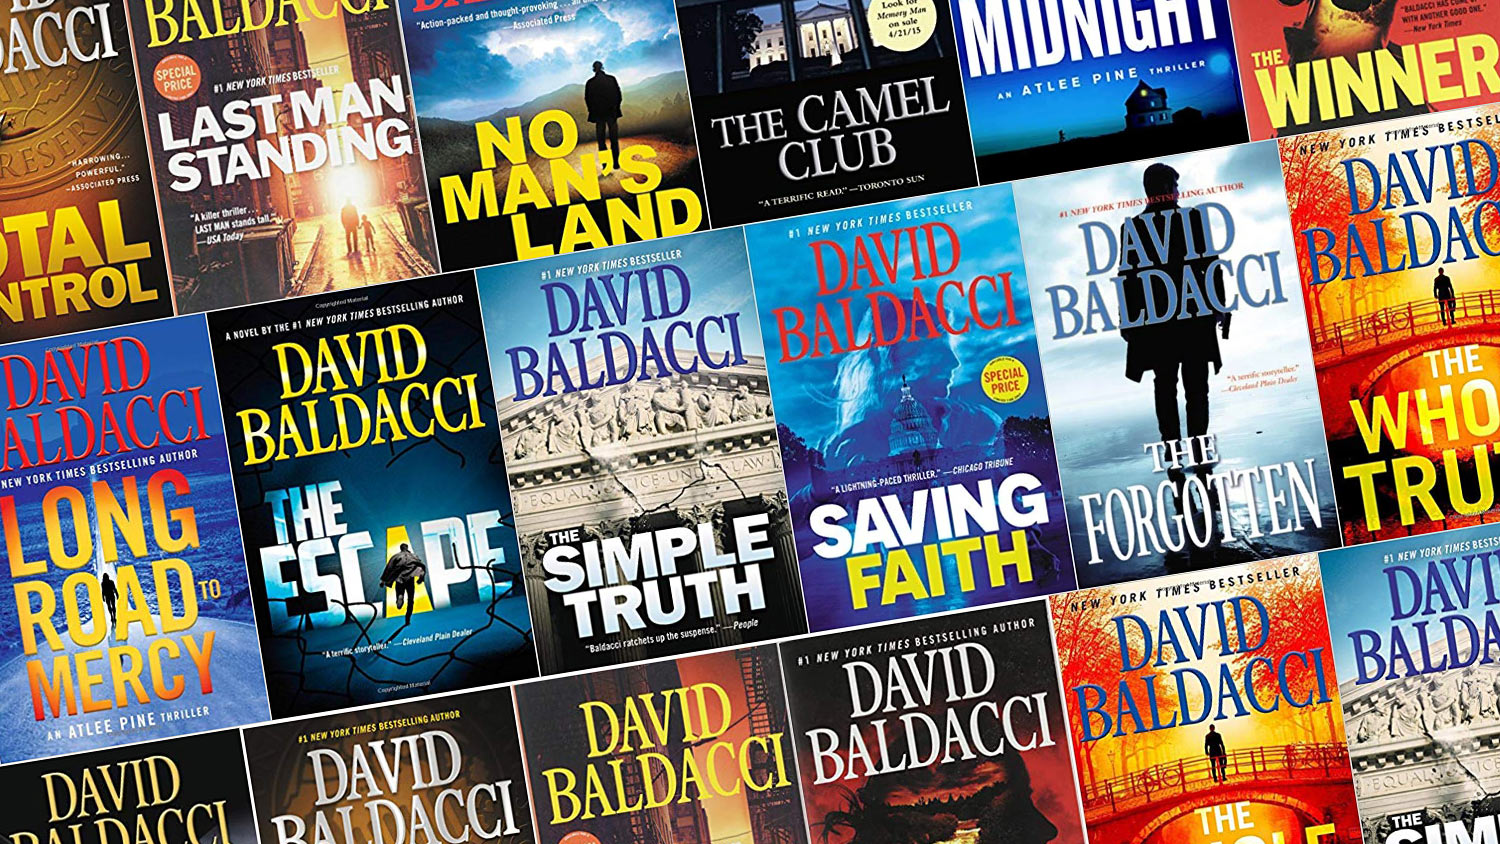 David Baldacci - books in order